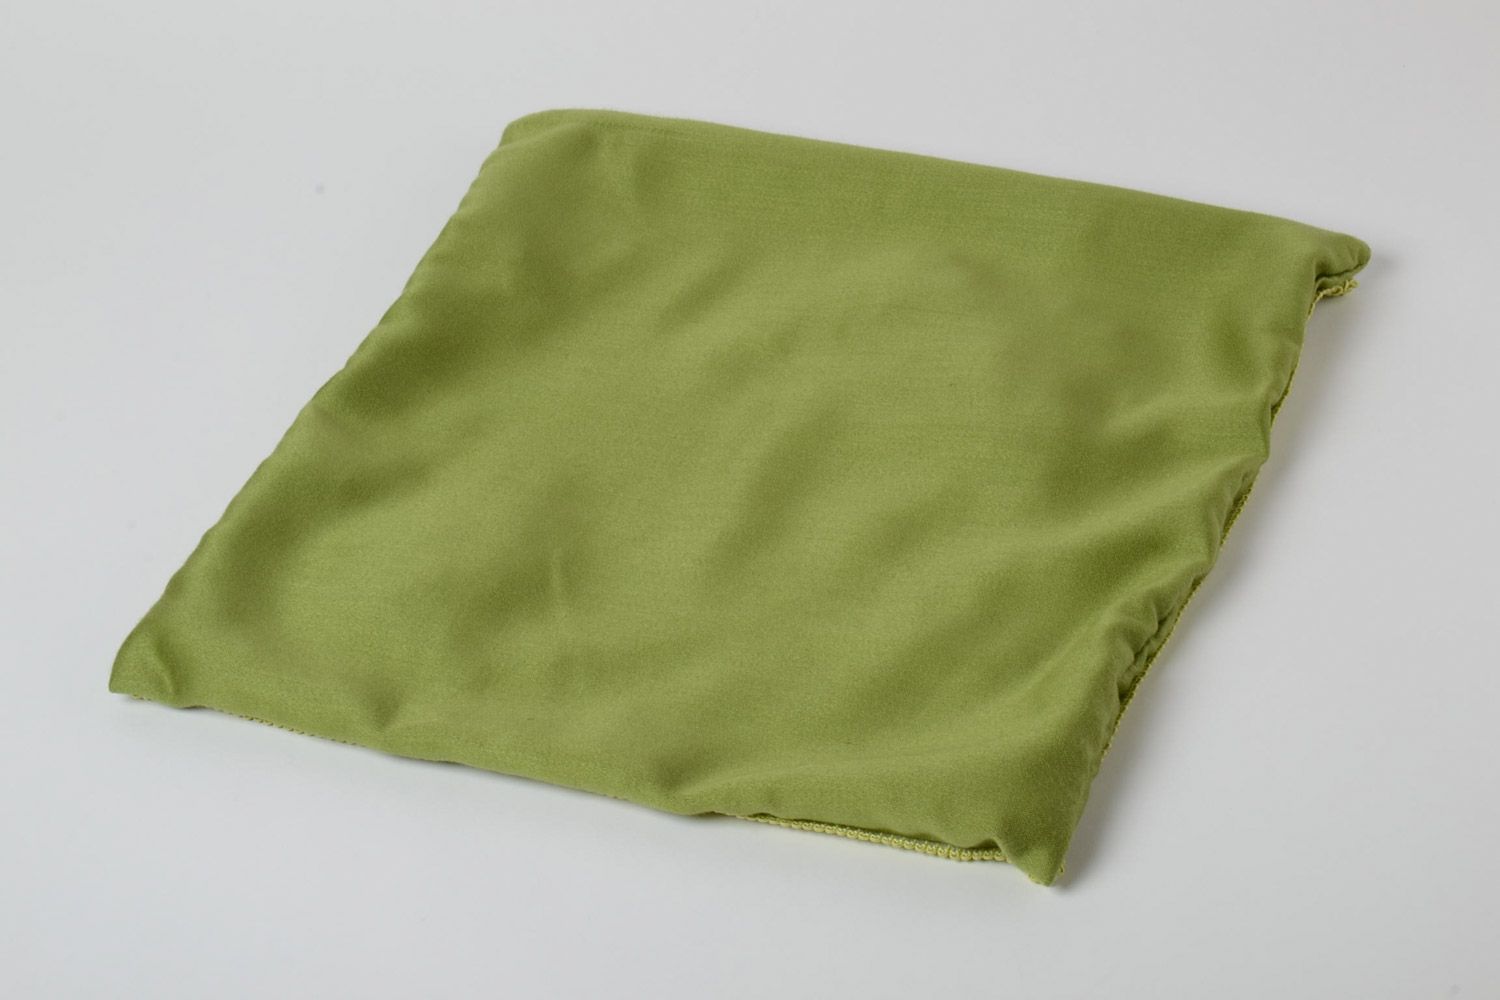 Taie d'oreiller en tissu verte avec broderie de rubans en satin faite main photo 5